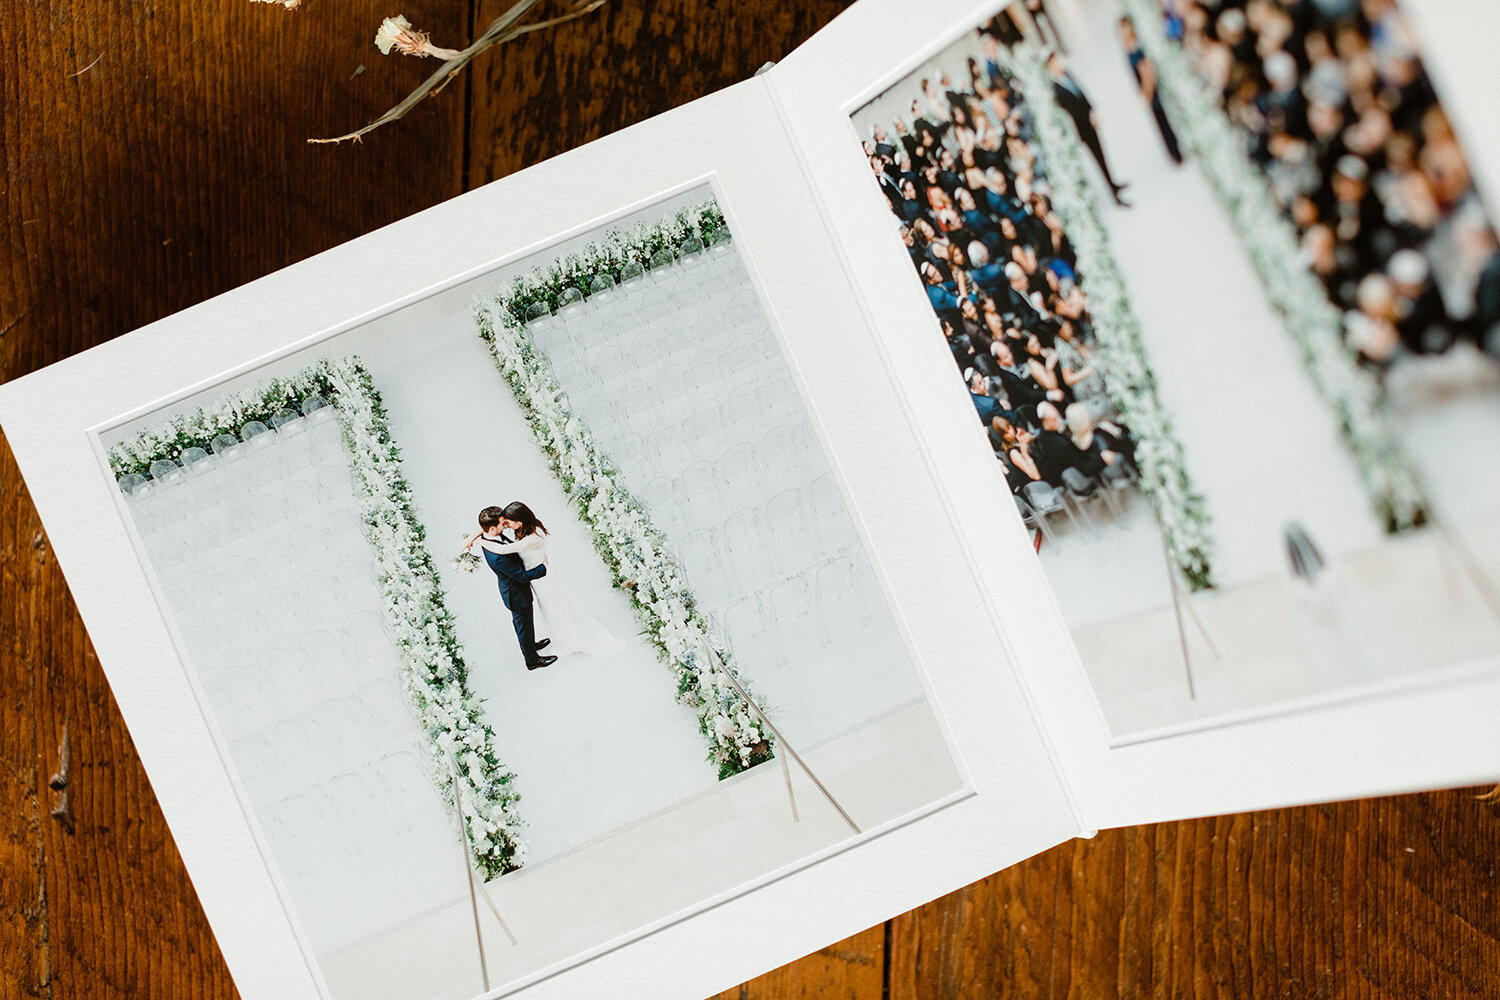 toronto-micro-wedding-photographer-album-design-wedding-album11.jpg